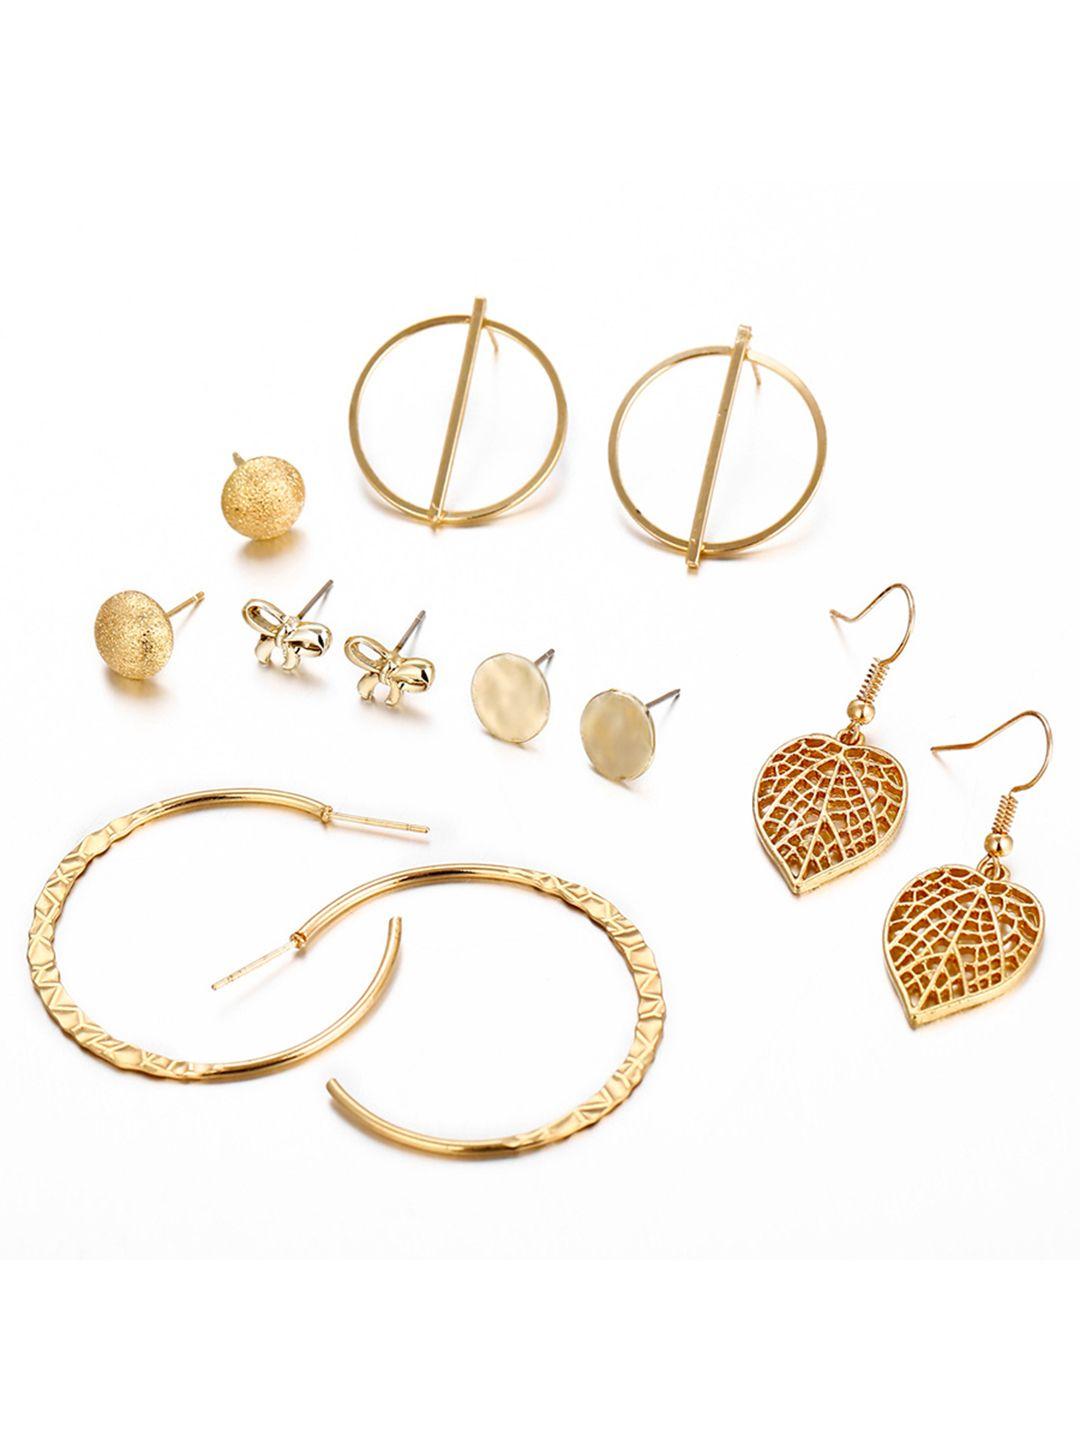 urbanic gold-toned set of 6 earrings